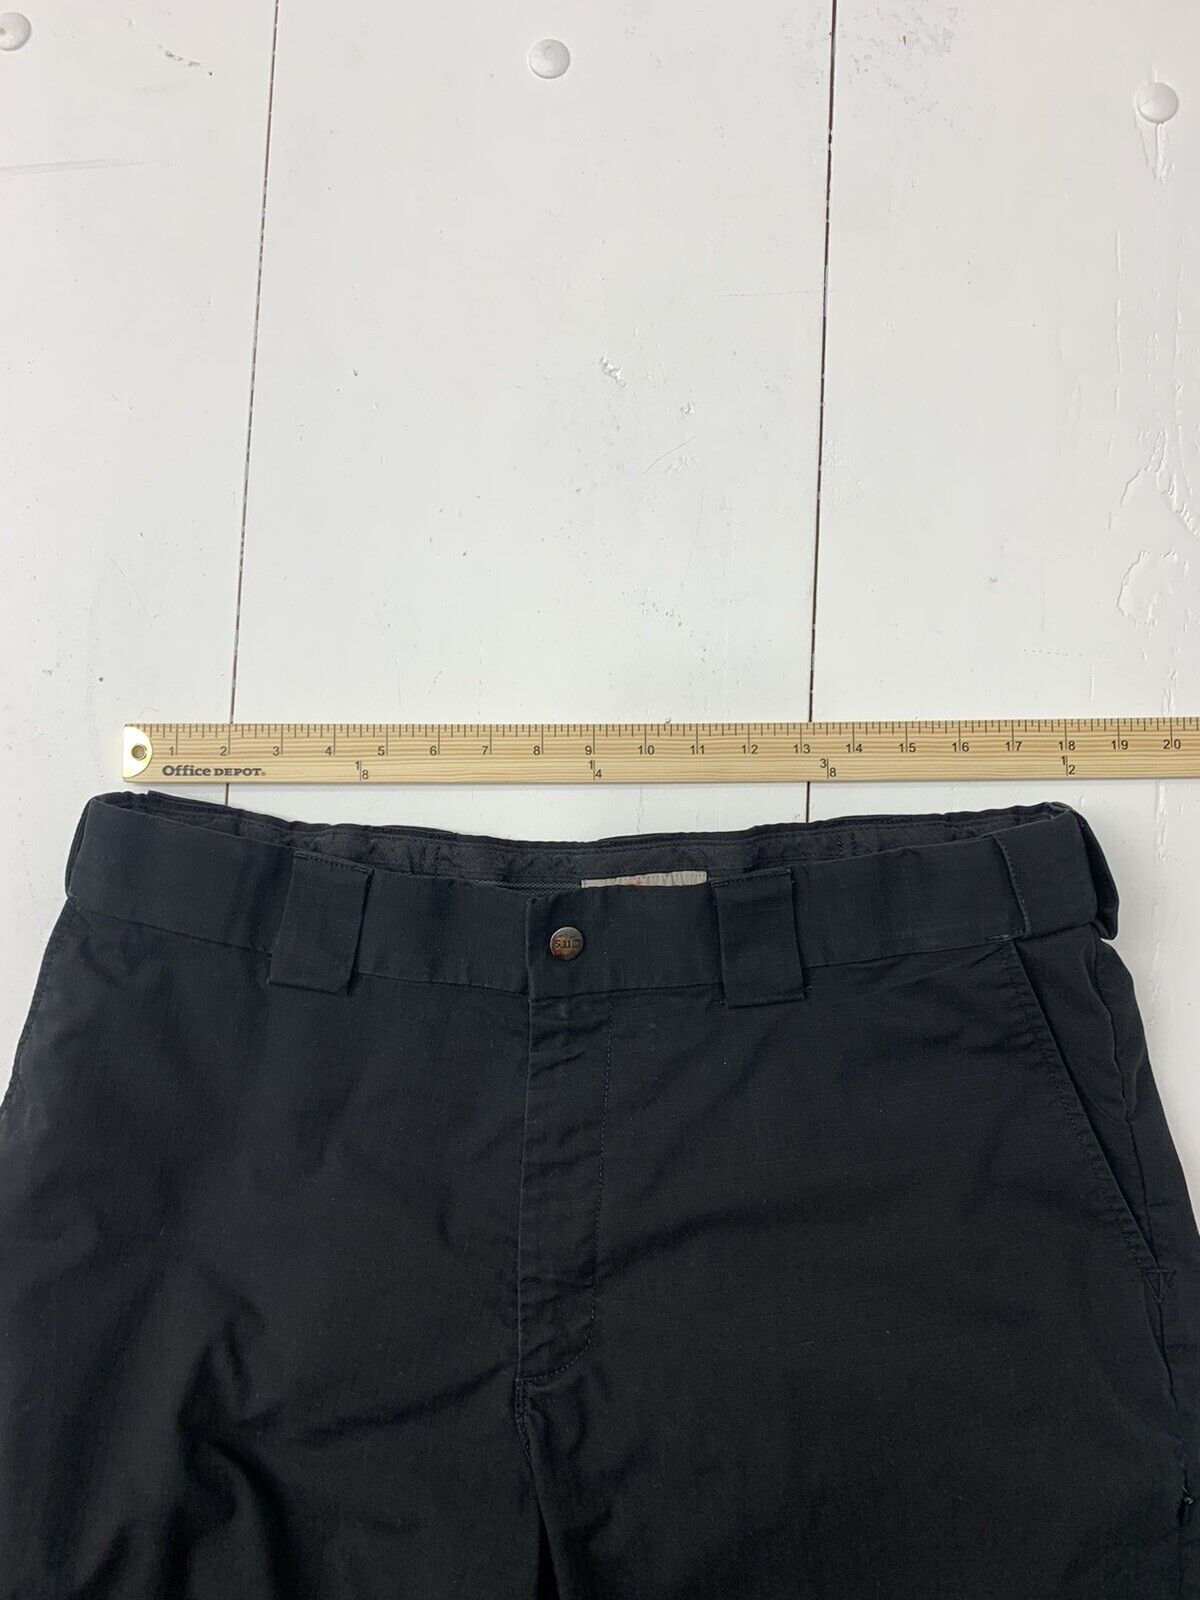 5.11 Tactical Black Pants Mens Size 40 - beyond exchange